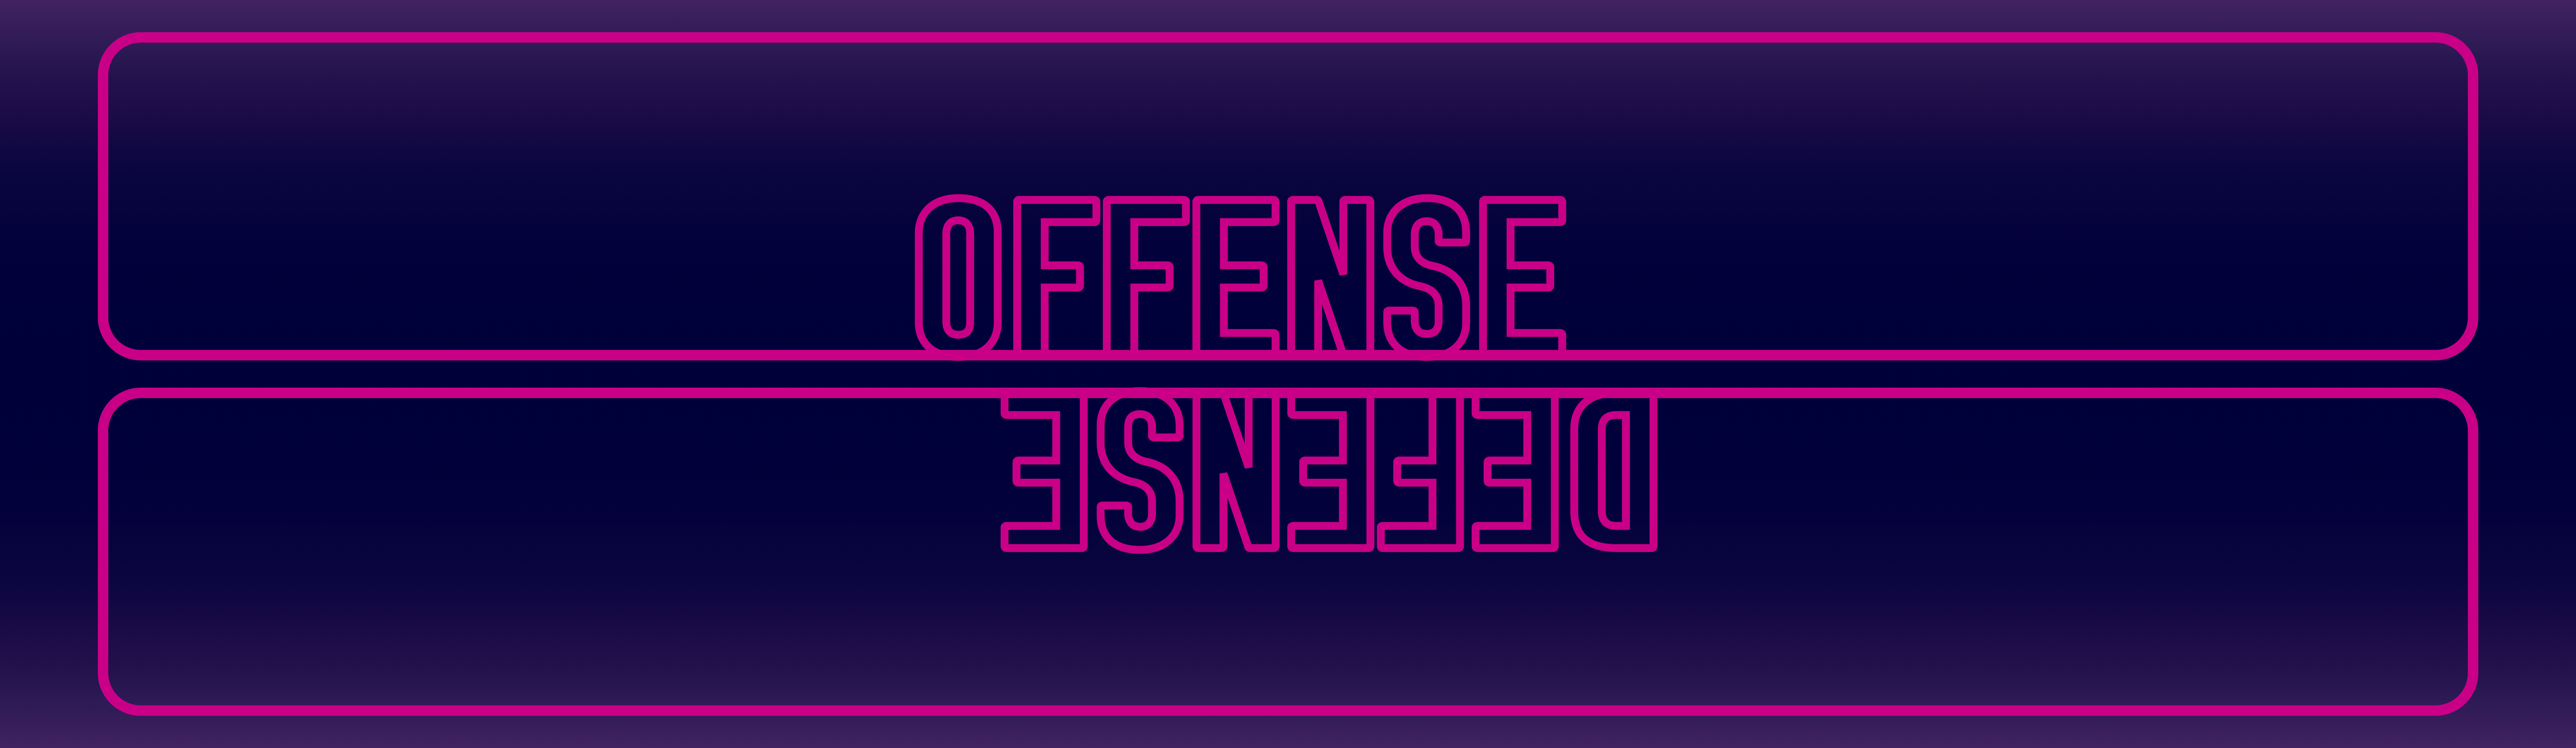 Offense - Defense